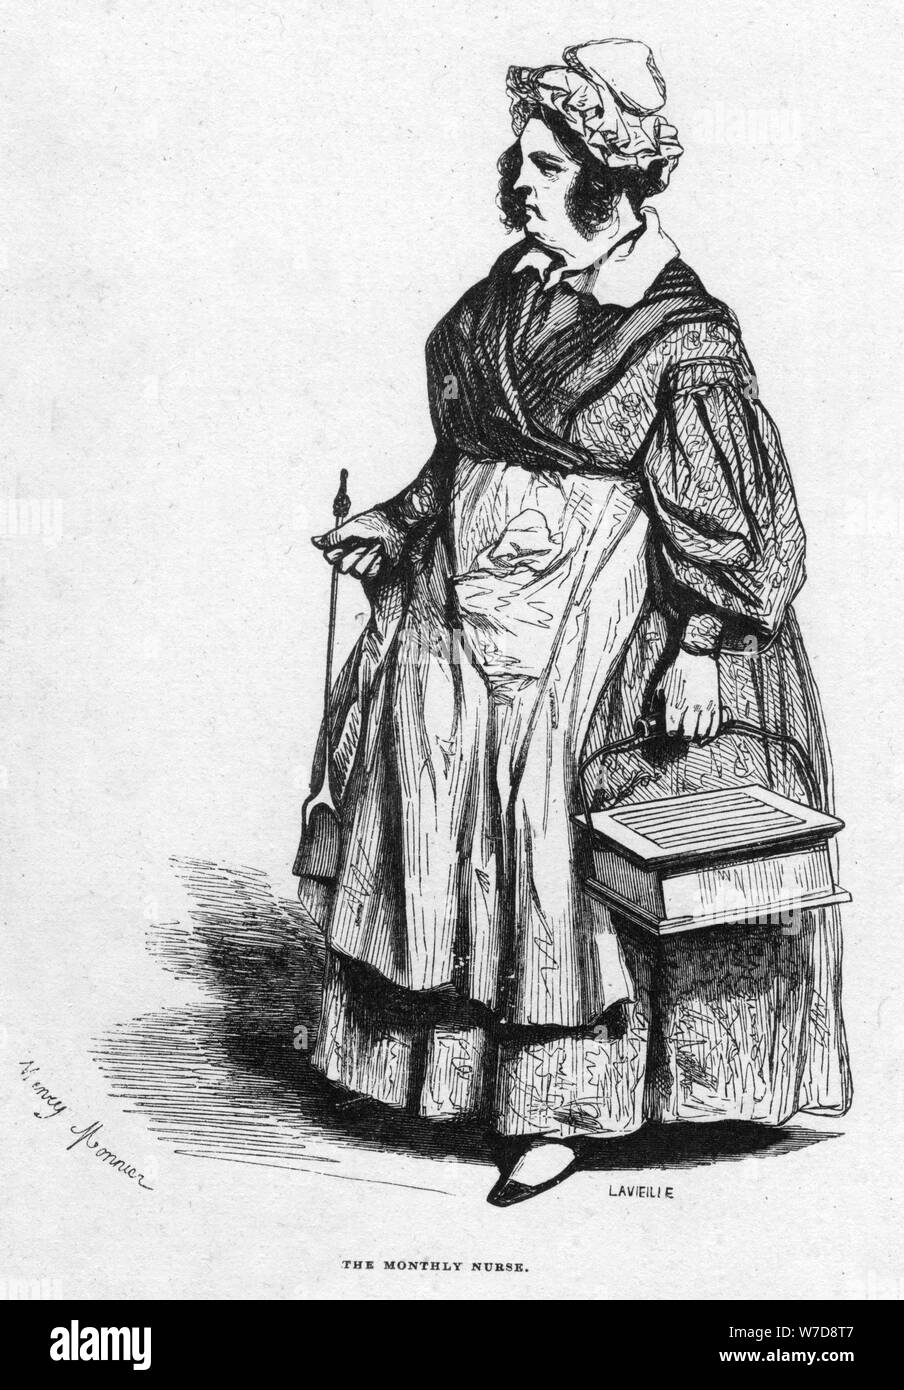 The monthly nurse, 19th century. Artist: Lavieille Stock Photo